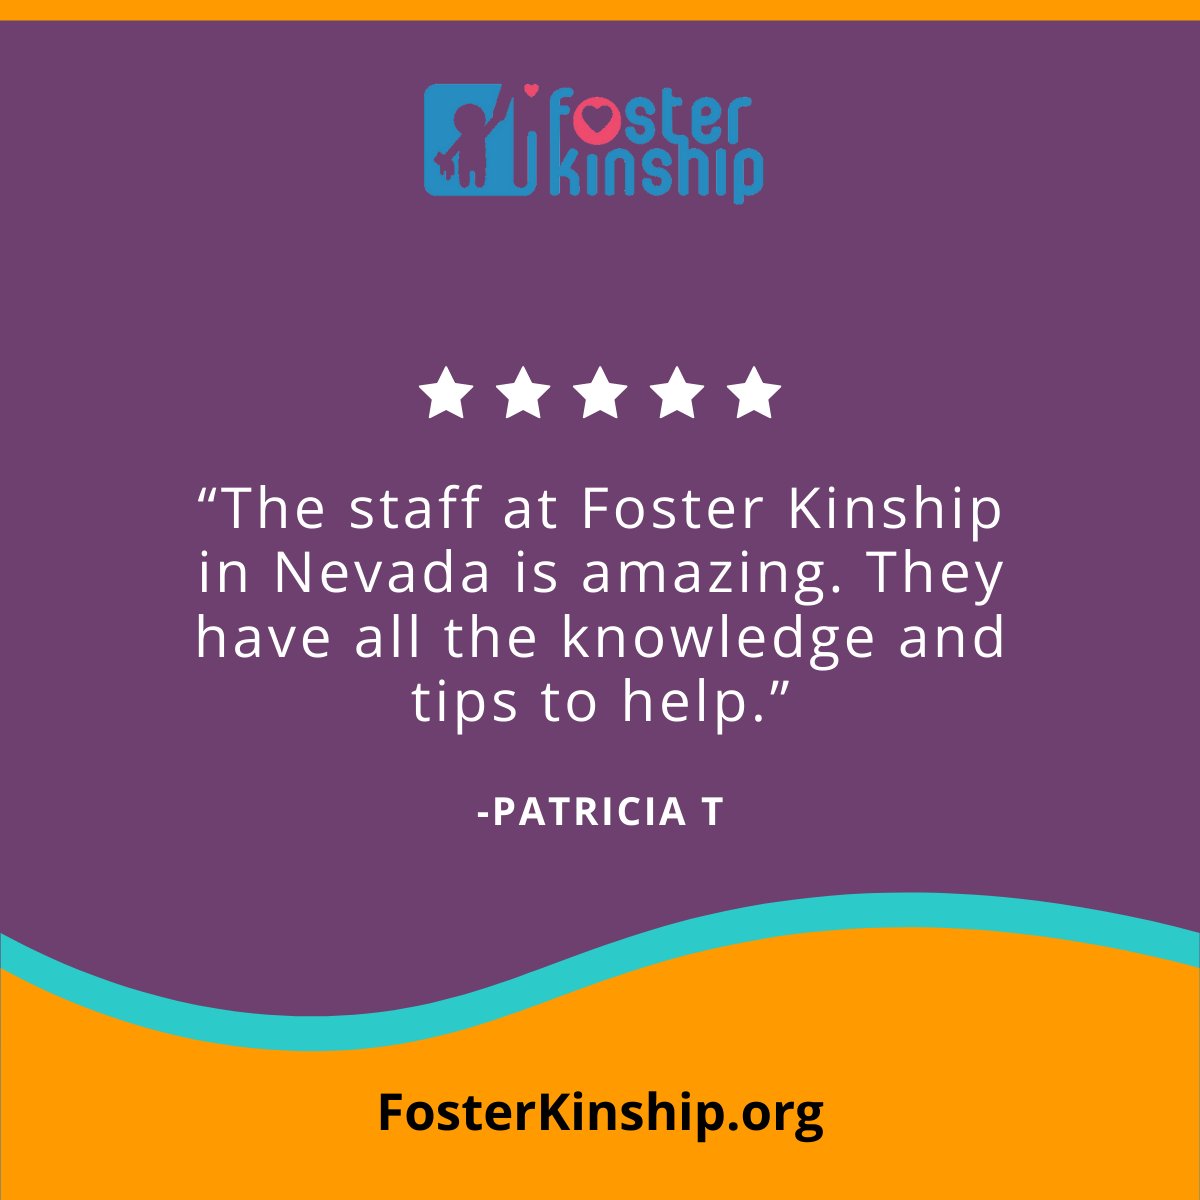 Hearing such wonderful feedback warms our hearts! Thank you very much, Patricia.

#NonprofitLasVegas #KinshipNavigator #ChildAdvocate #FosterKinshipLasVegas #FosterLove #Kin